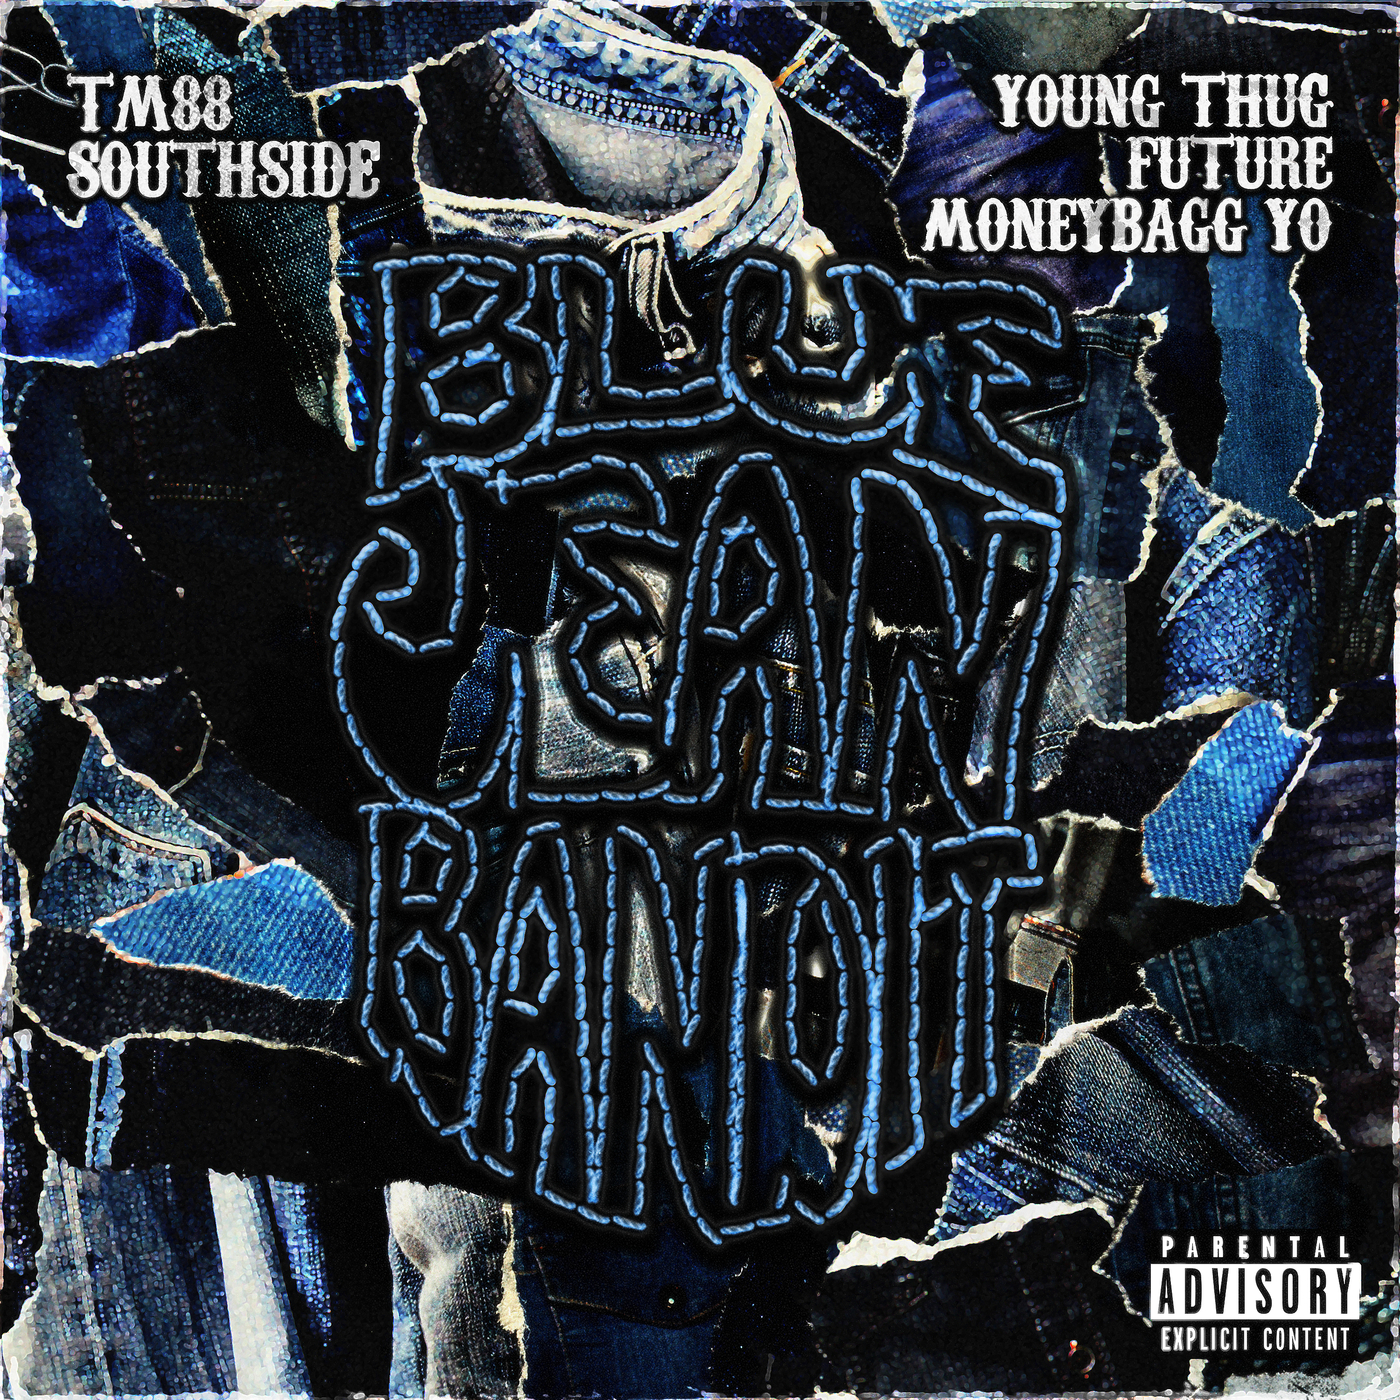 Descarca TM88, Southside, Moneybagg Yo - Blue Jean Bandit (feat. Young Thug & Future)